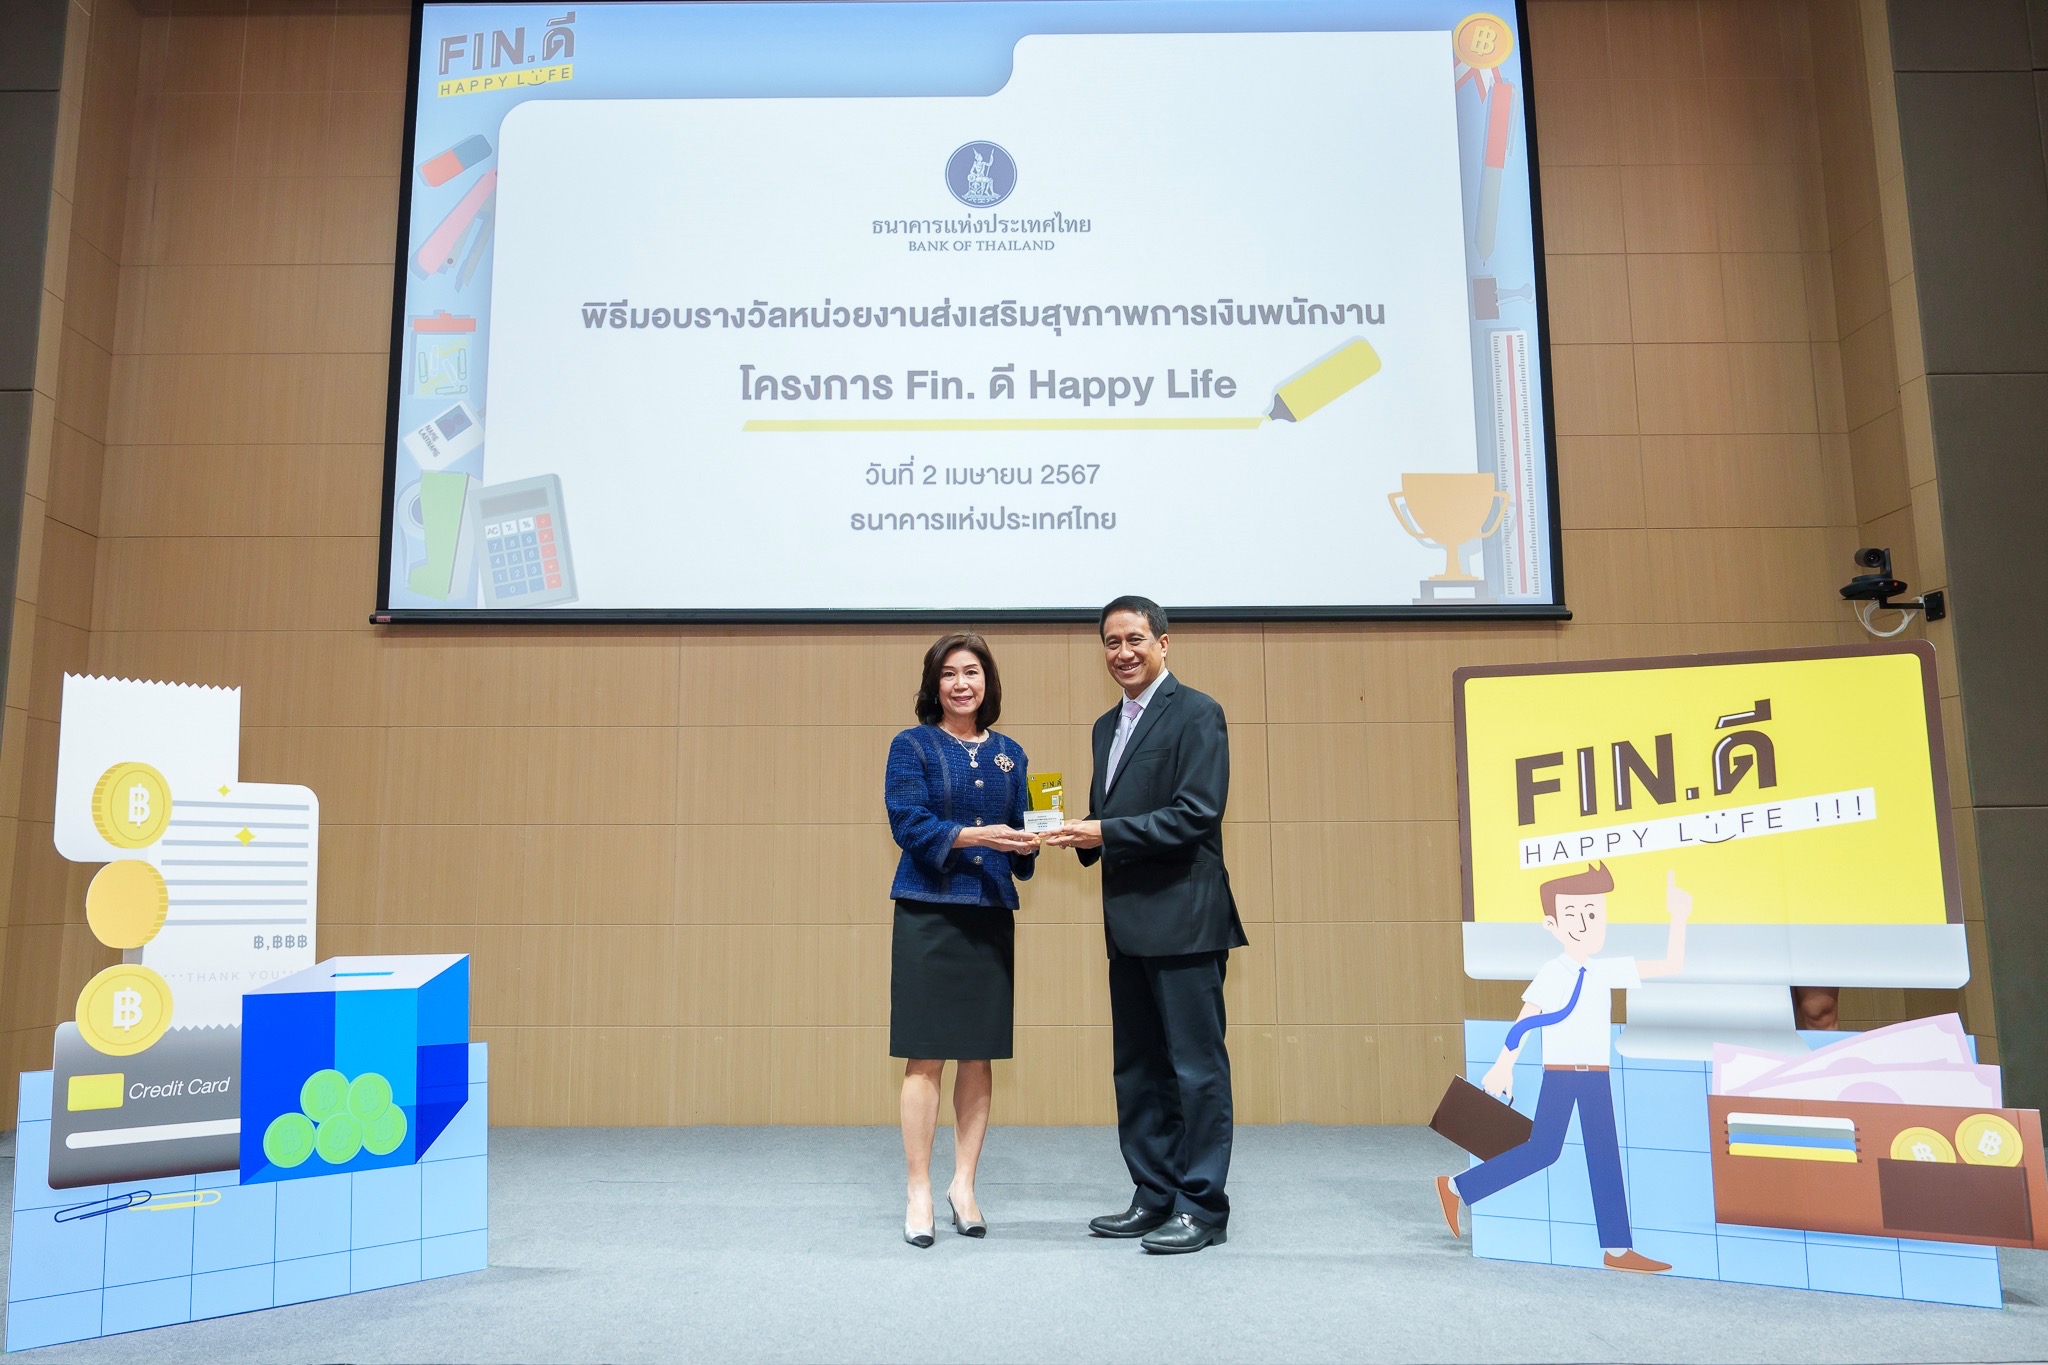 OCEAN LIFE ไทยสมุทร รับรางวัล “หน่วยงานส่งเสริมสุขภาพการเงินพนักงานระดับดีเด่น” ในโครงการ Fin. ดี Happy Life ประจำปี 2567 ของธนาคารแห่งประเทศไทย